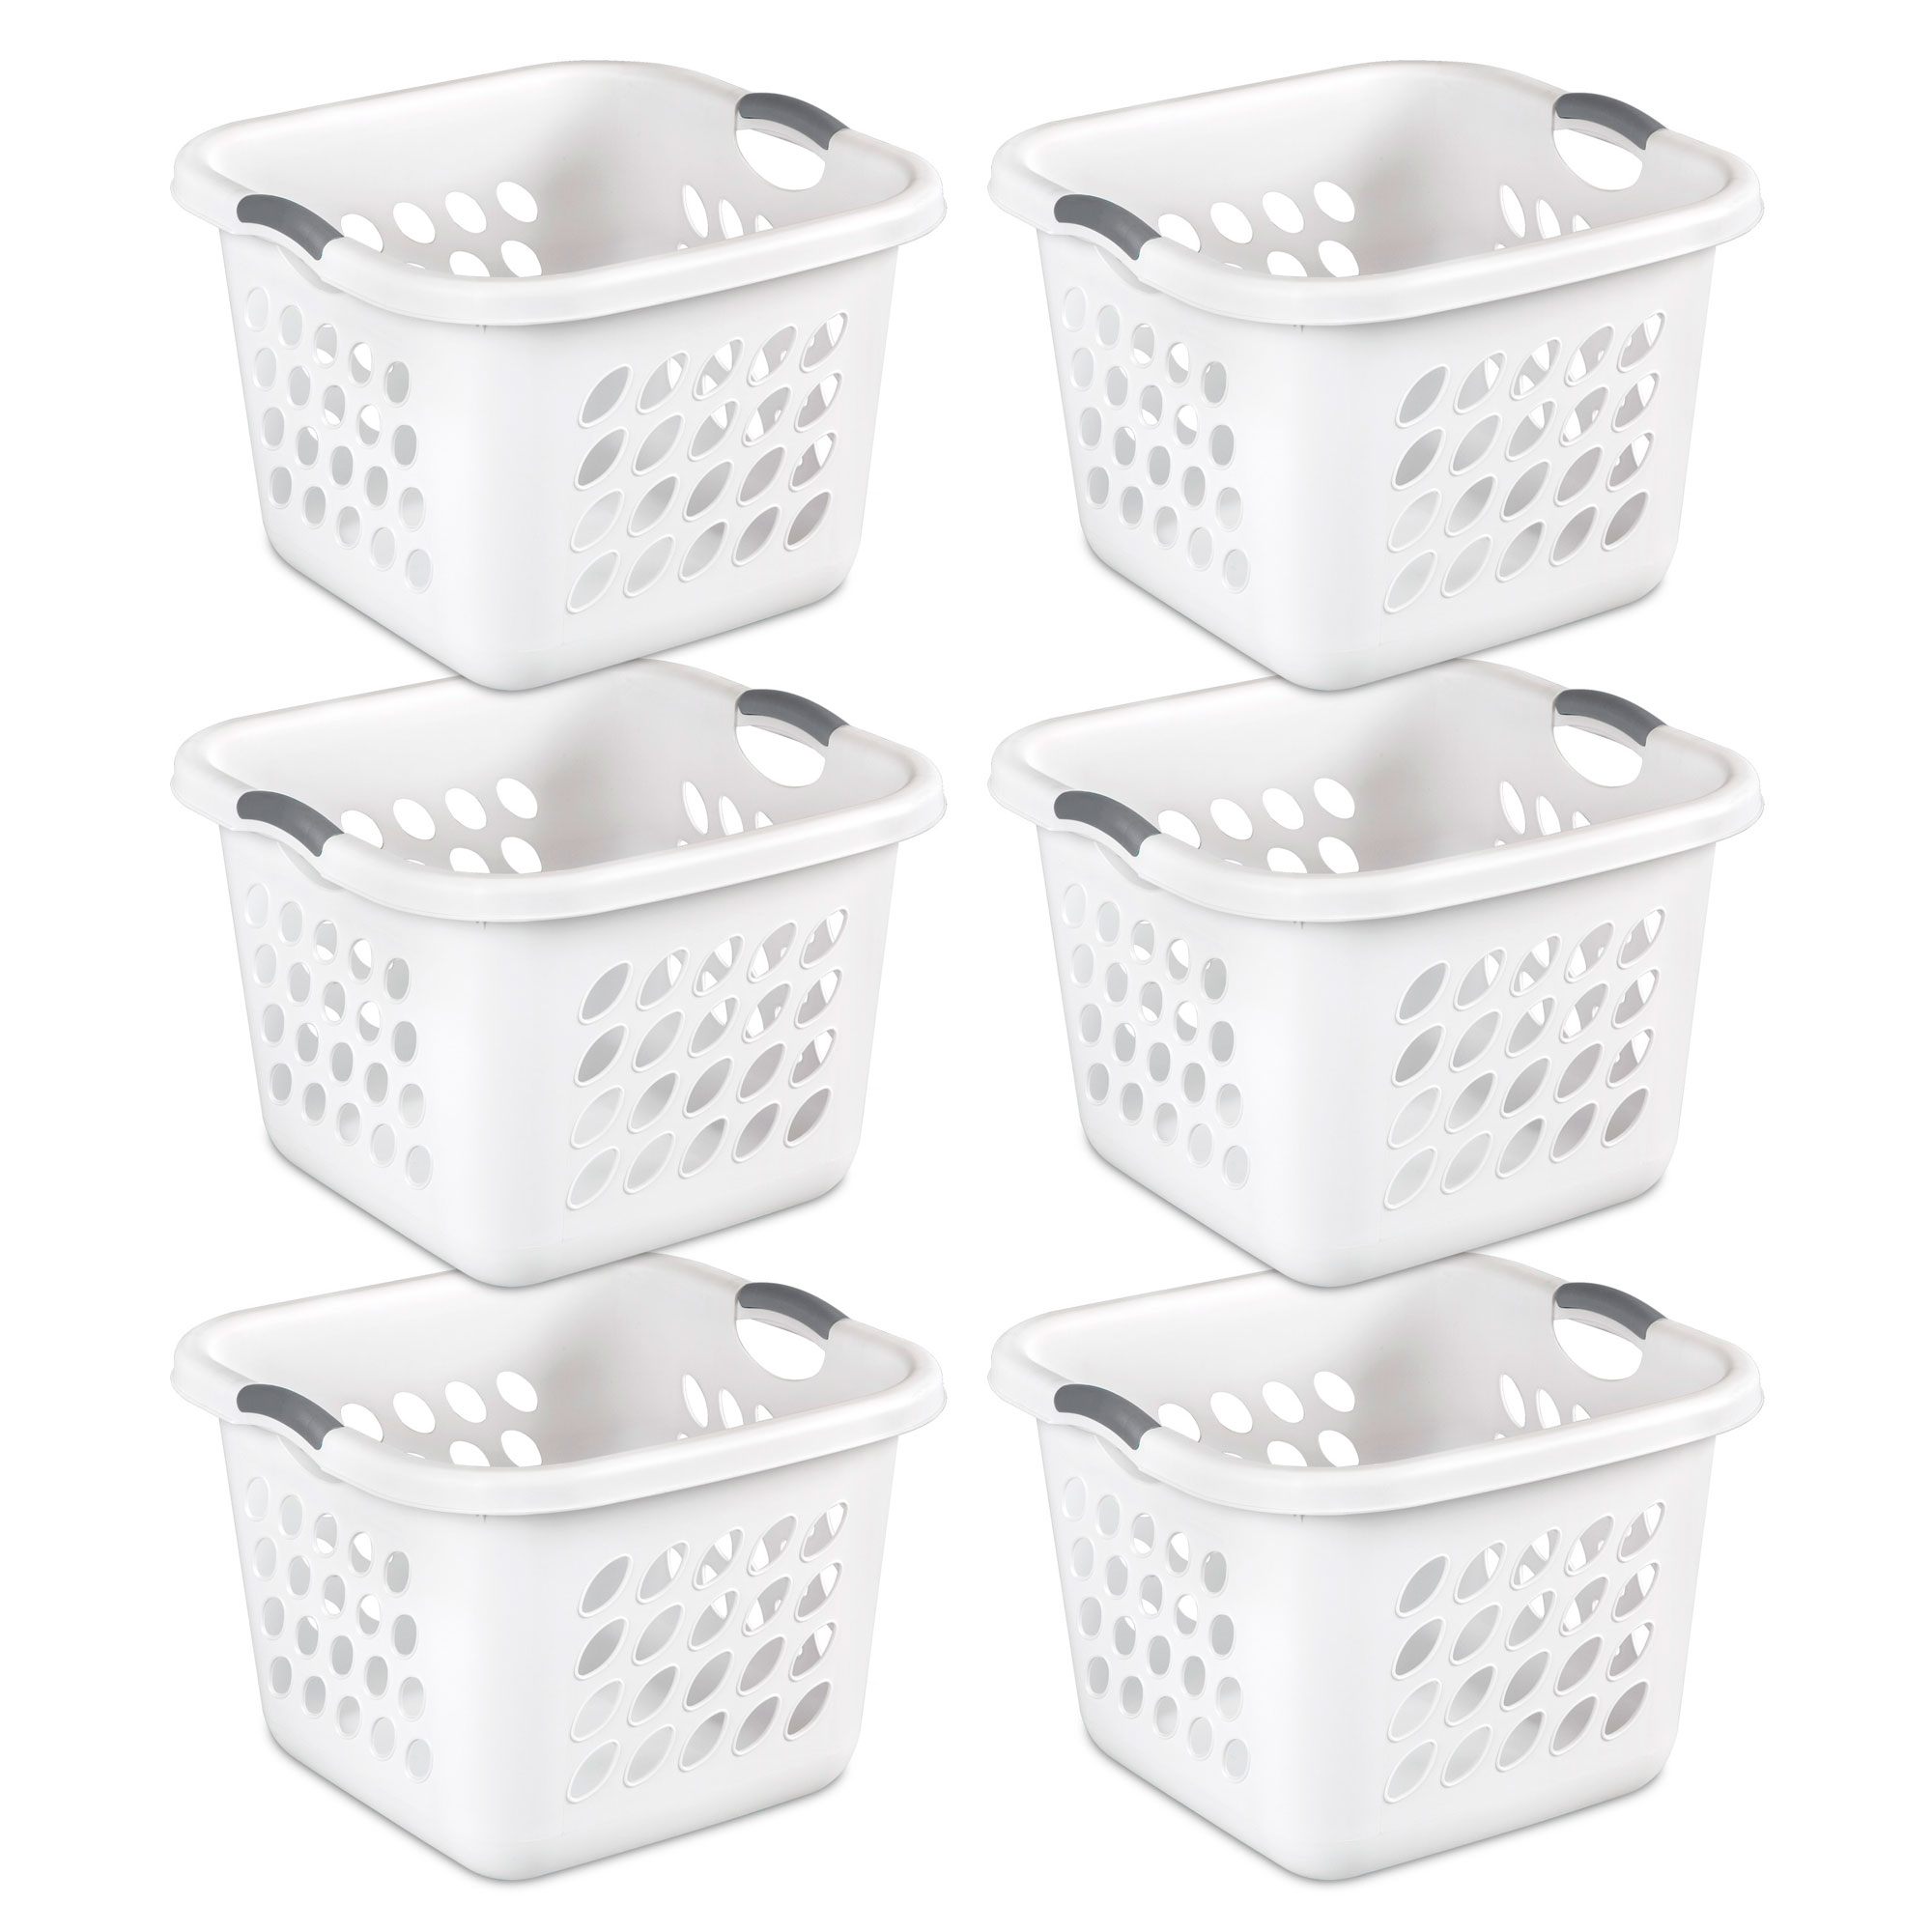 STERILITE 12178006 1.5 Bushel//53 Liter Ultra Square Laundry Basket Pack of 6 White Basket w//Titanium Inserts